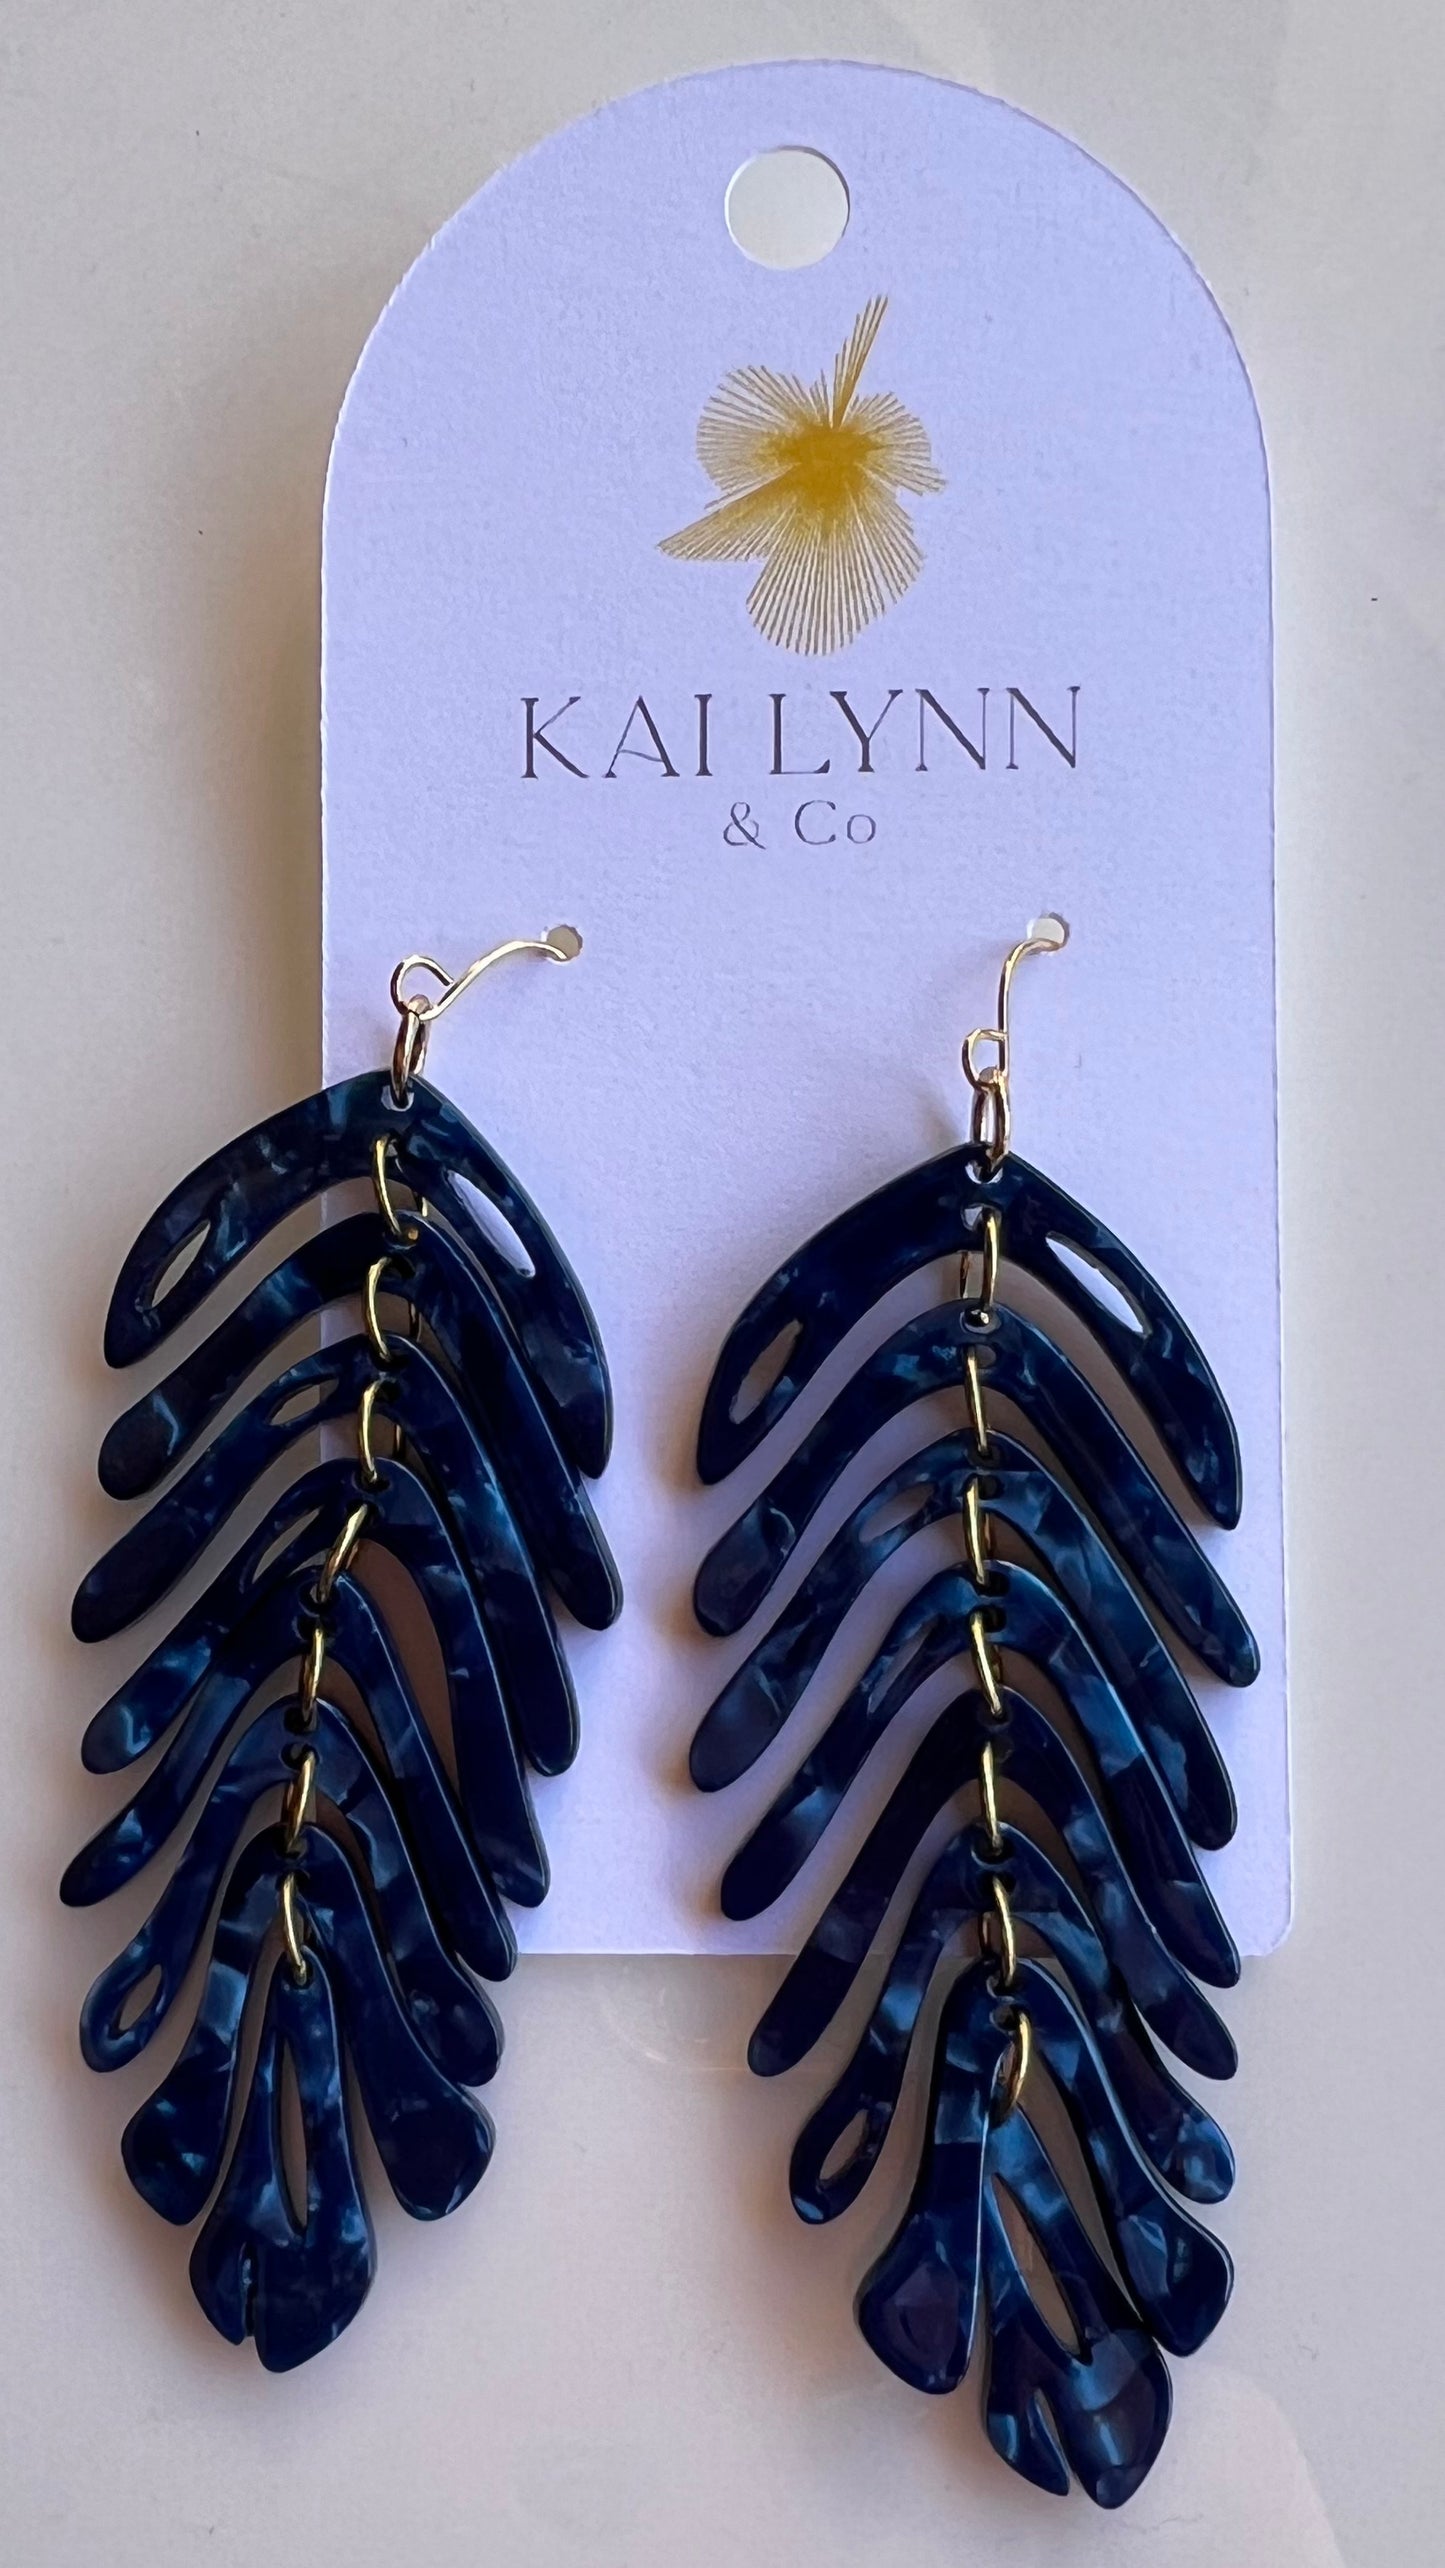 Kai Lynn and Co. Fishbone Earrings